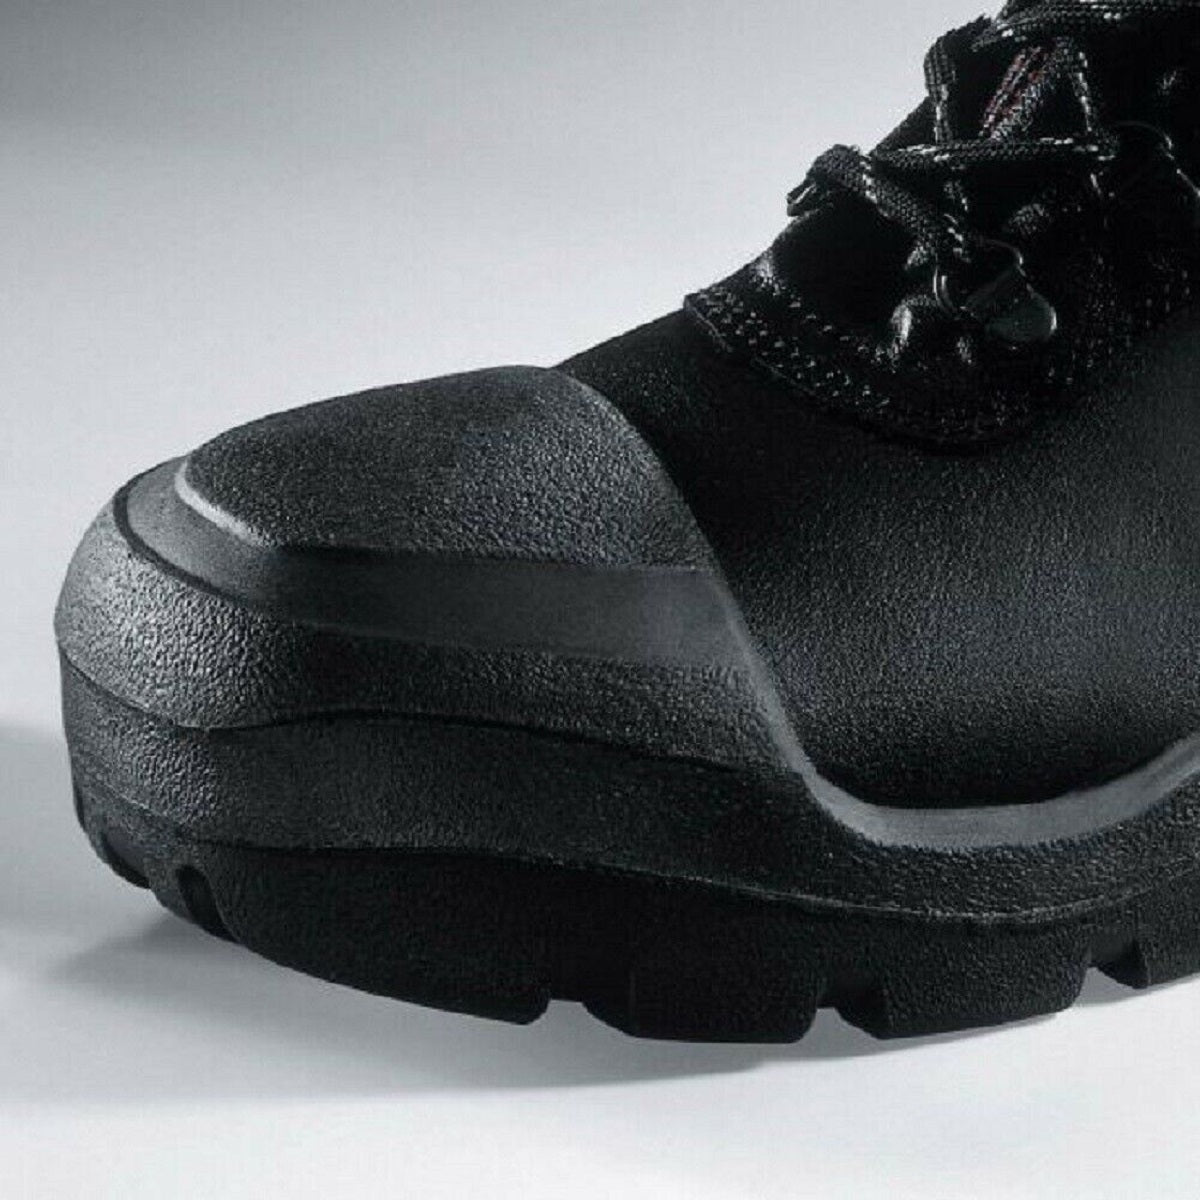 Uvex Quatro 84012 S3 Safety Boots. Steel Toe-cap, Steel Mid-sole, Black Leather Upper. Bumper Cap protexU